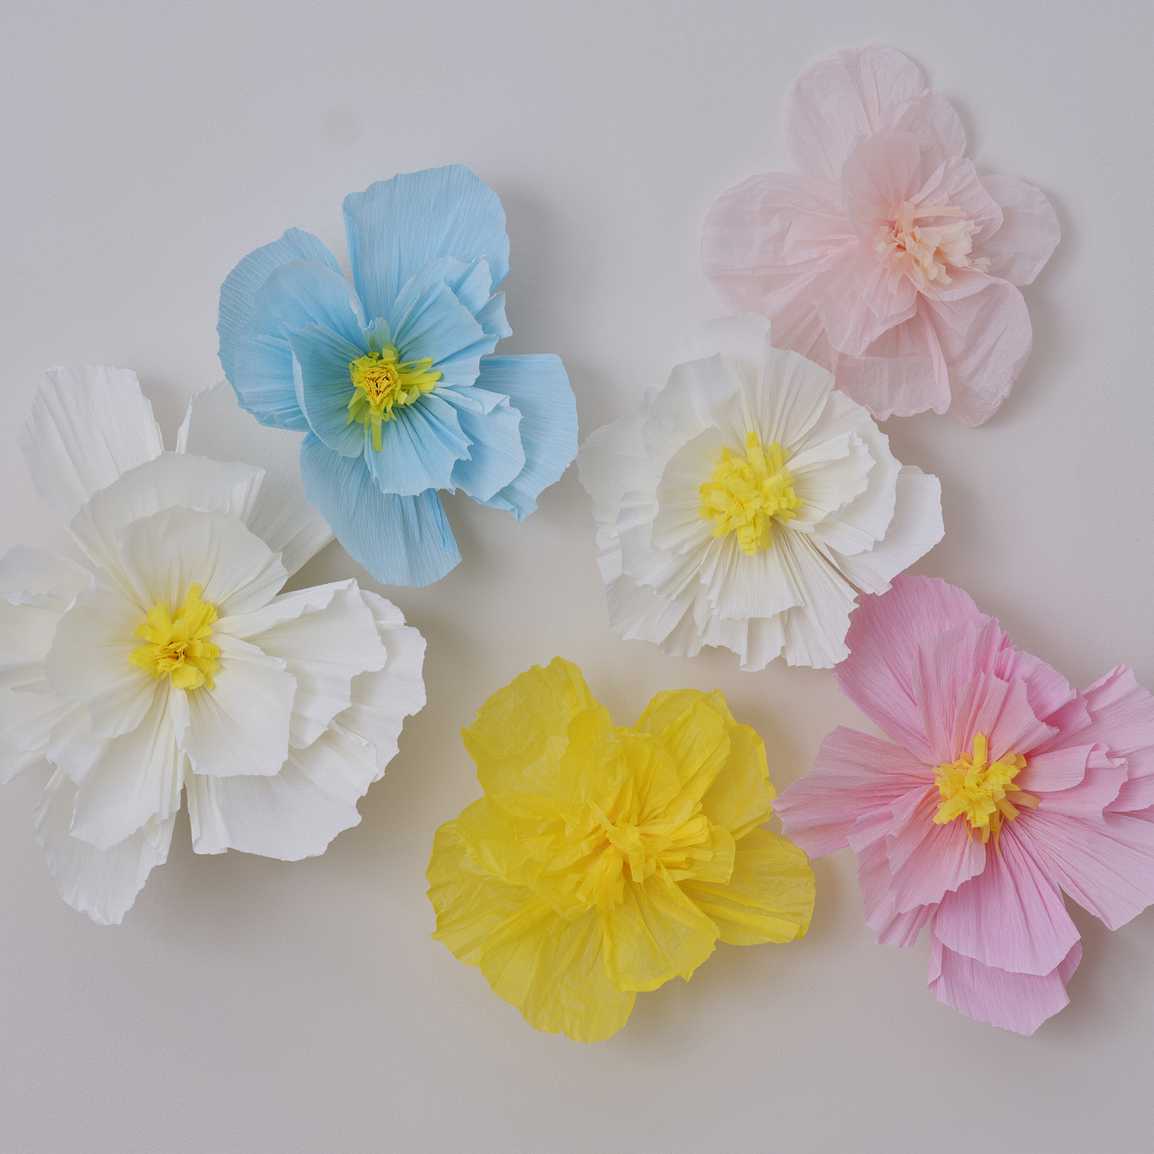 Decoration of colored paper flowers 6 pcs